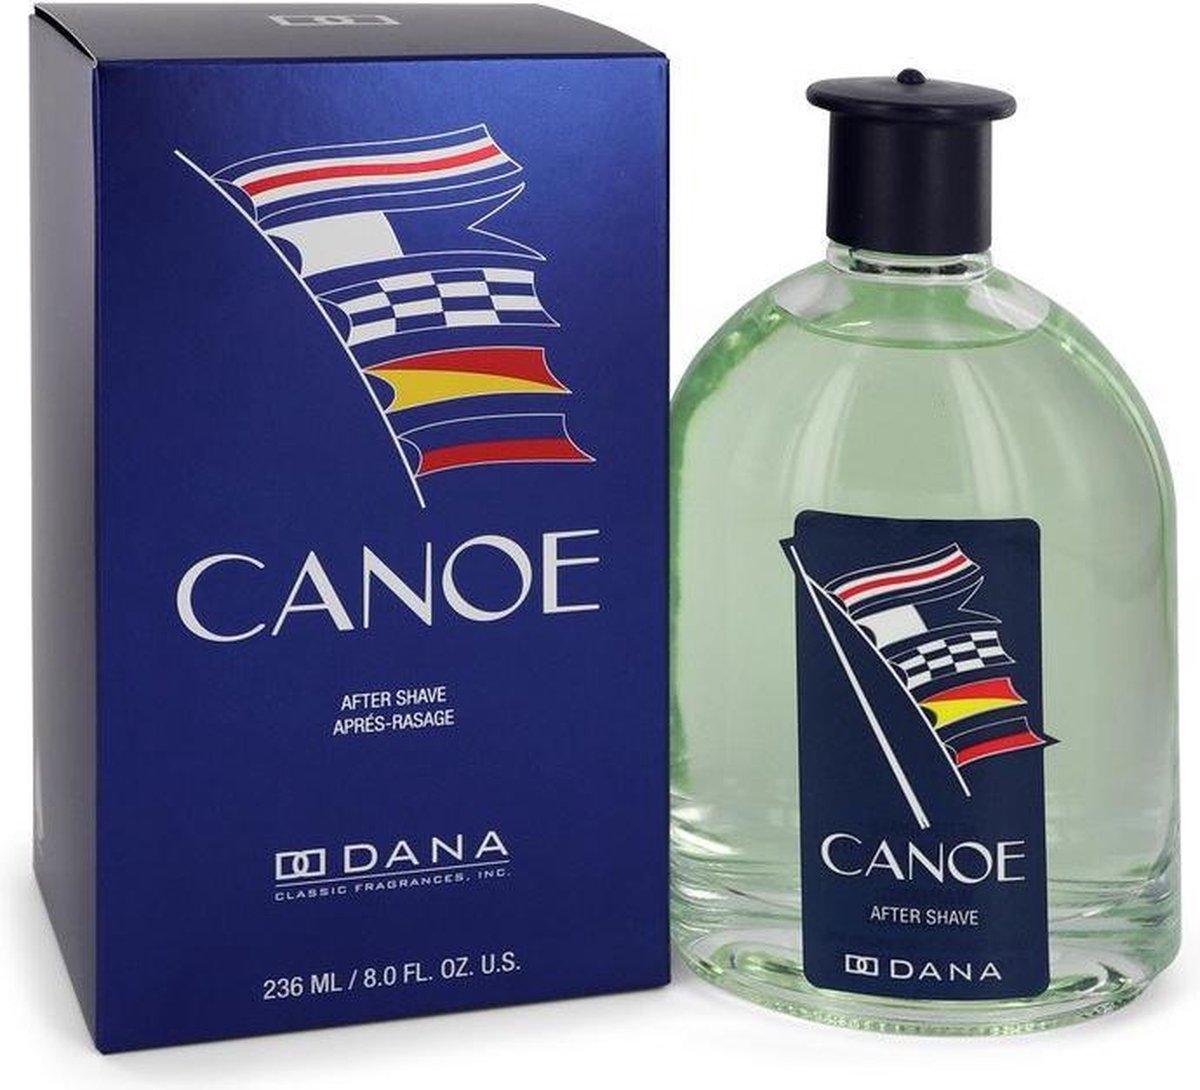 CANOE by Dana 240 ml - After Shave Splash